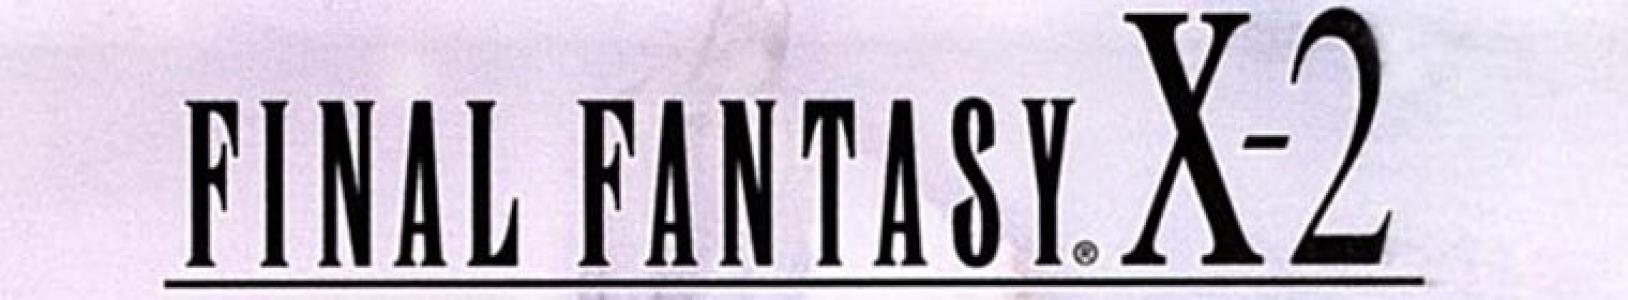 Final Fantasy X-2 banner